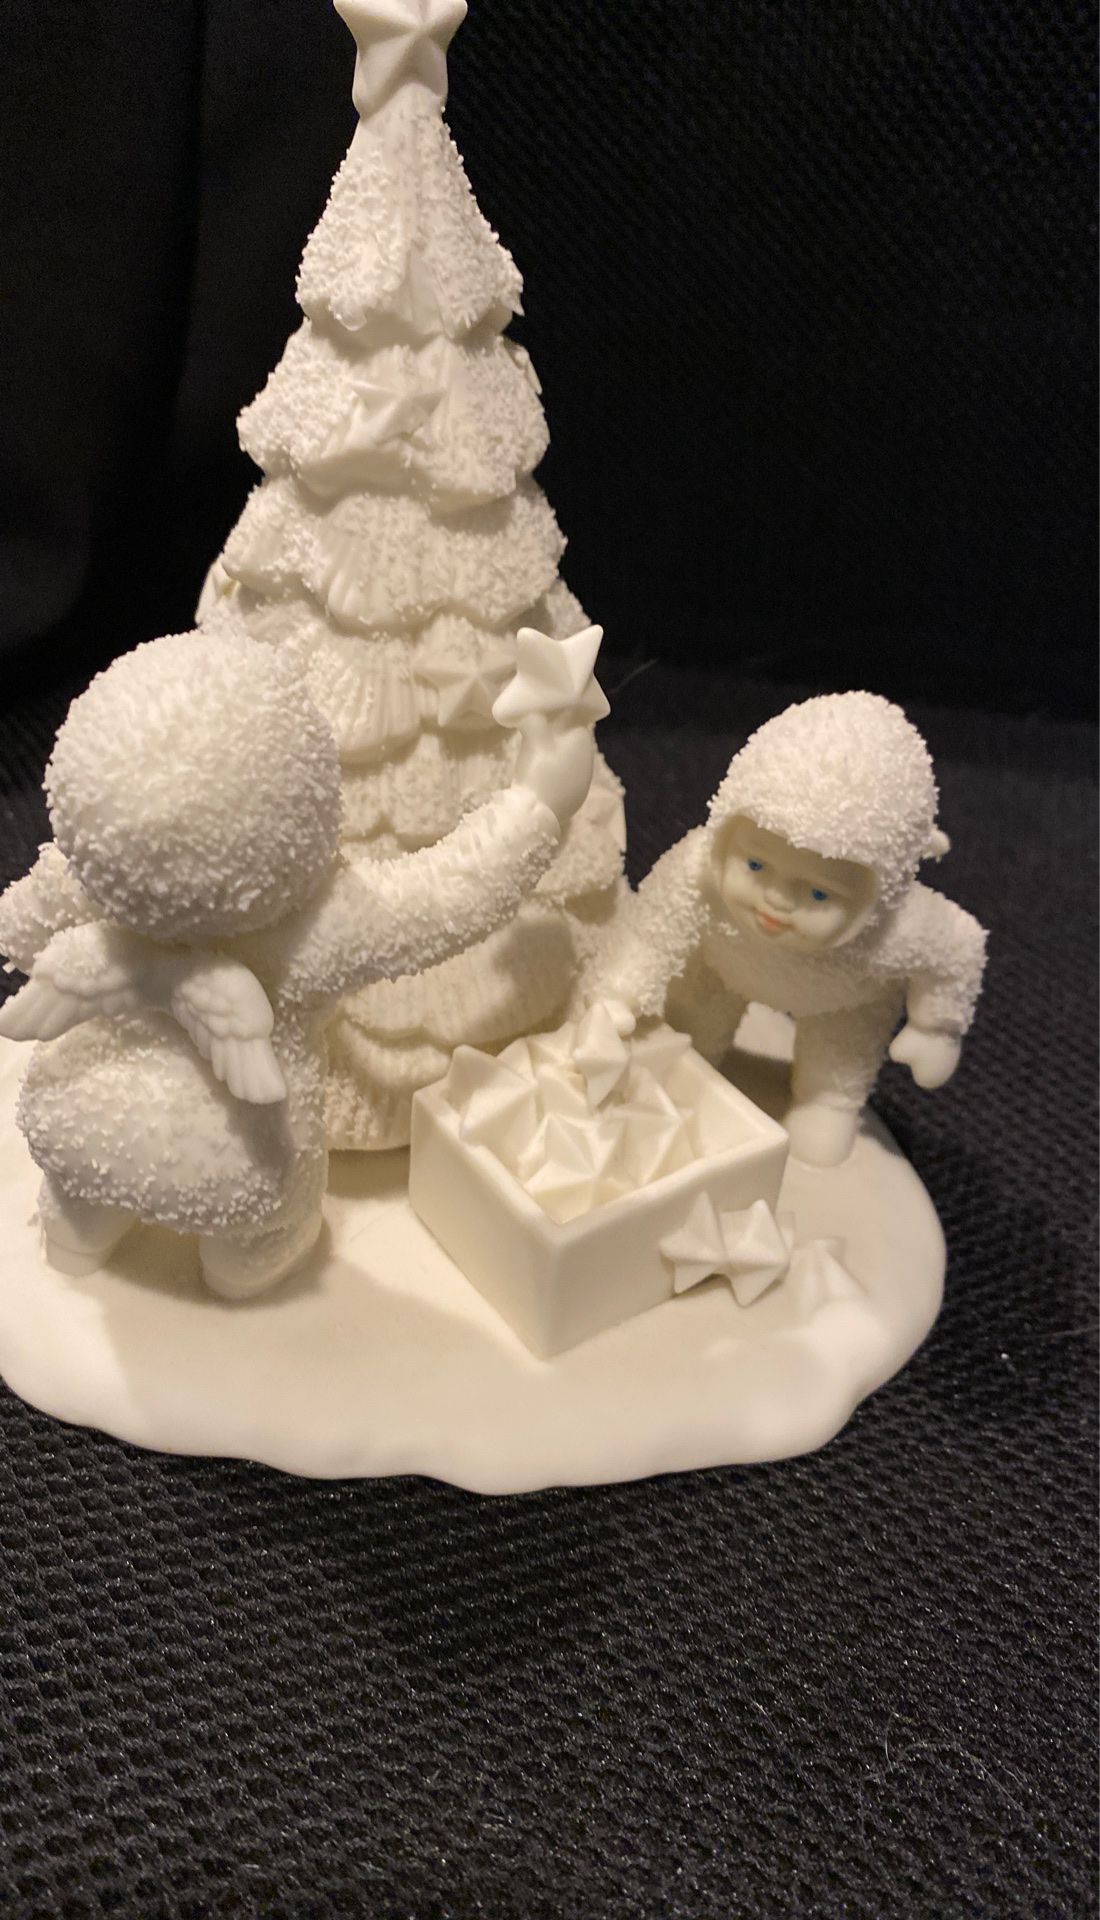 Snowbabies figurines